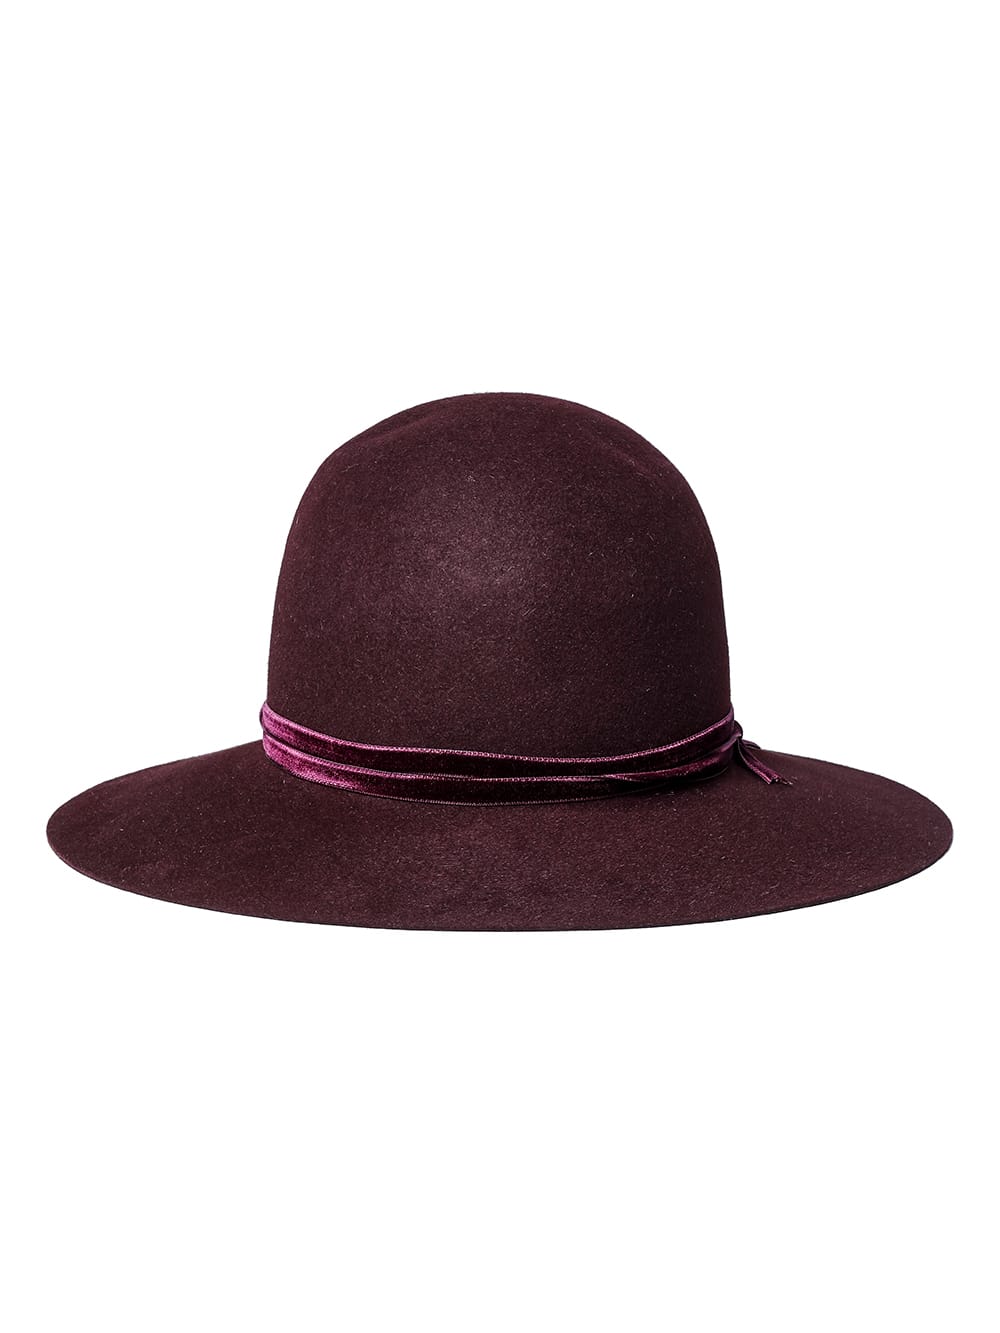 sa.0015AW23-bordeaux bowler hat./velvet ribbon. THE TWO OF